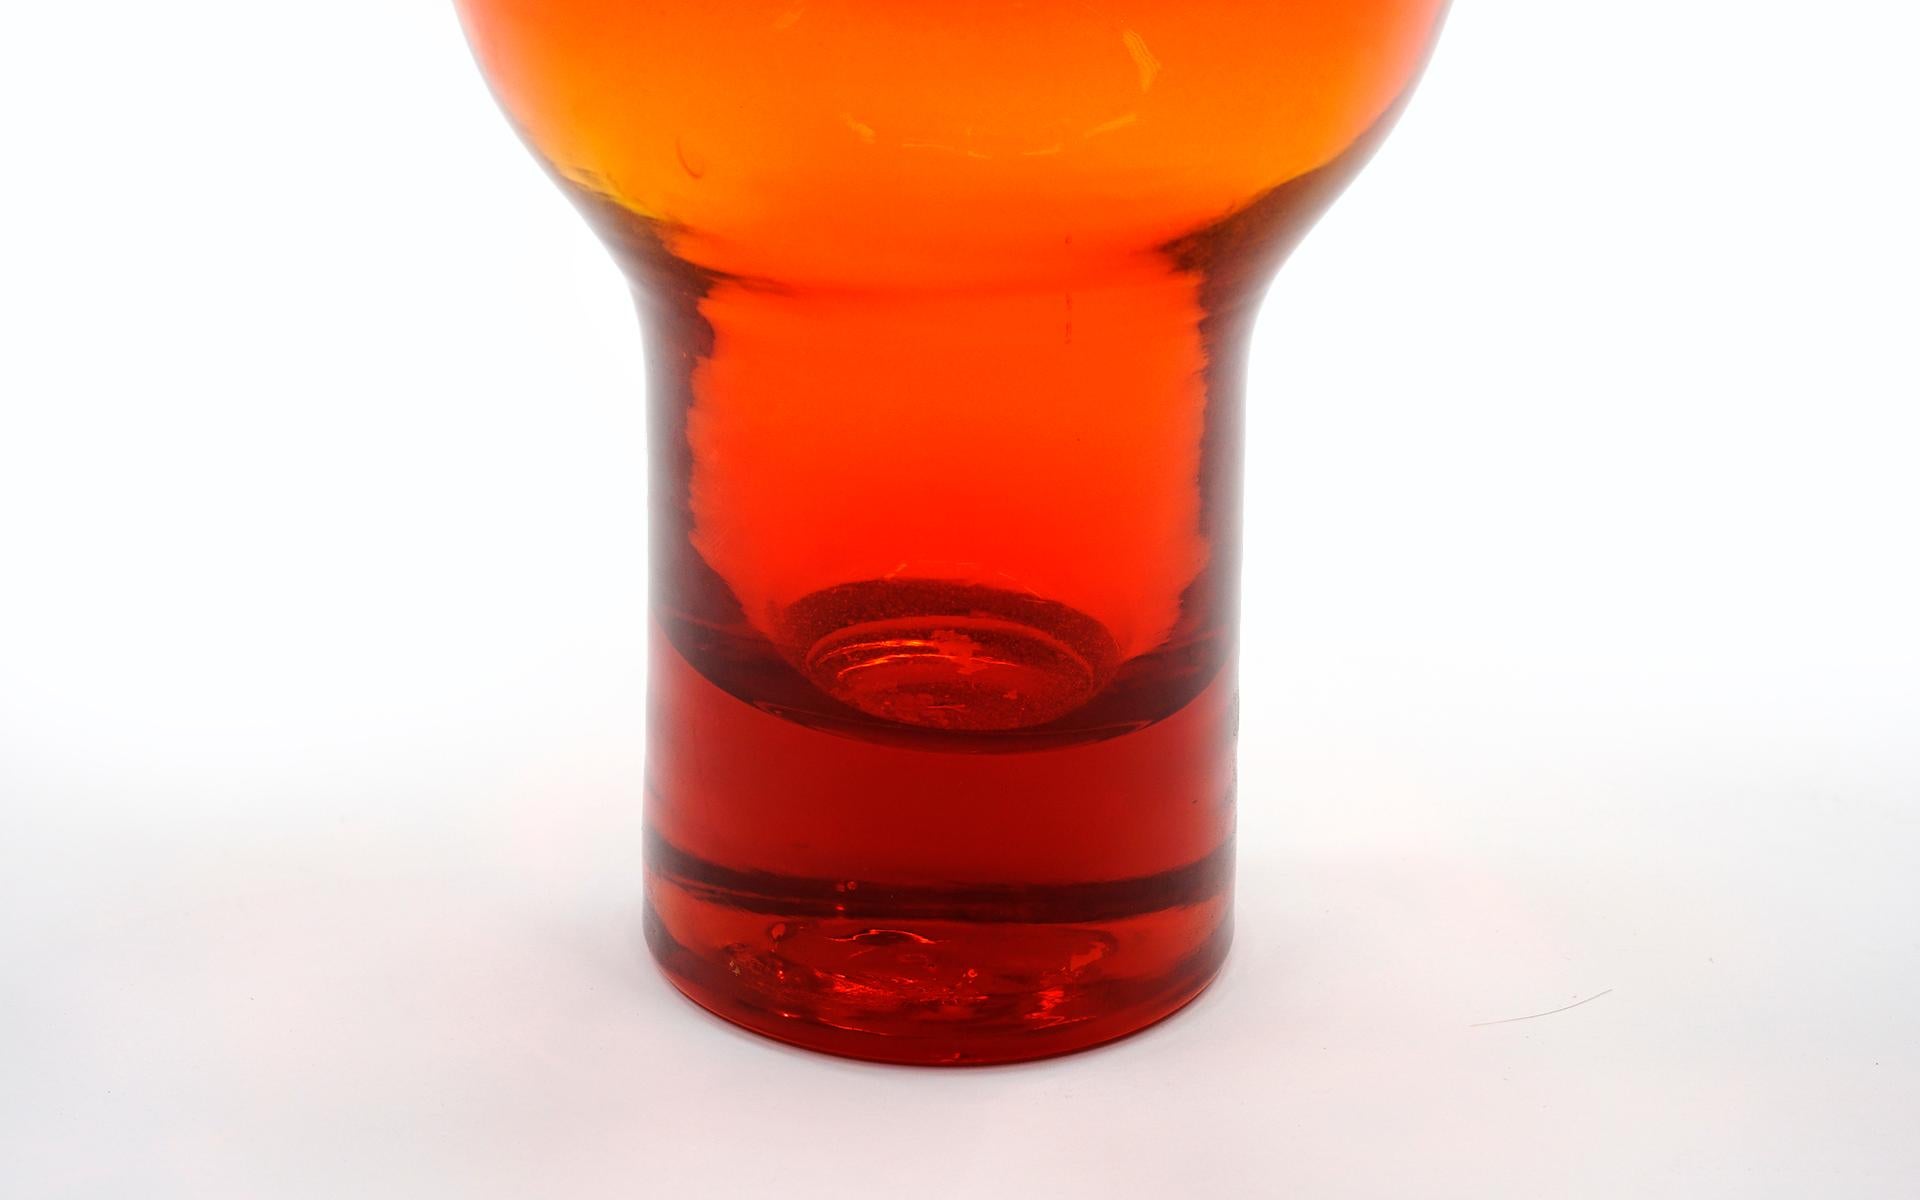 American Orange Blenko Blown Art Glass Bottle with Original Stopper, Mint Condition